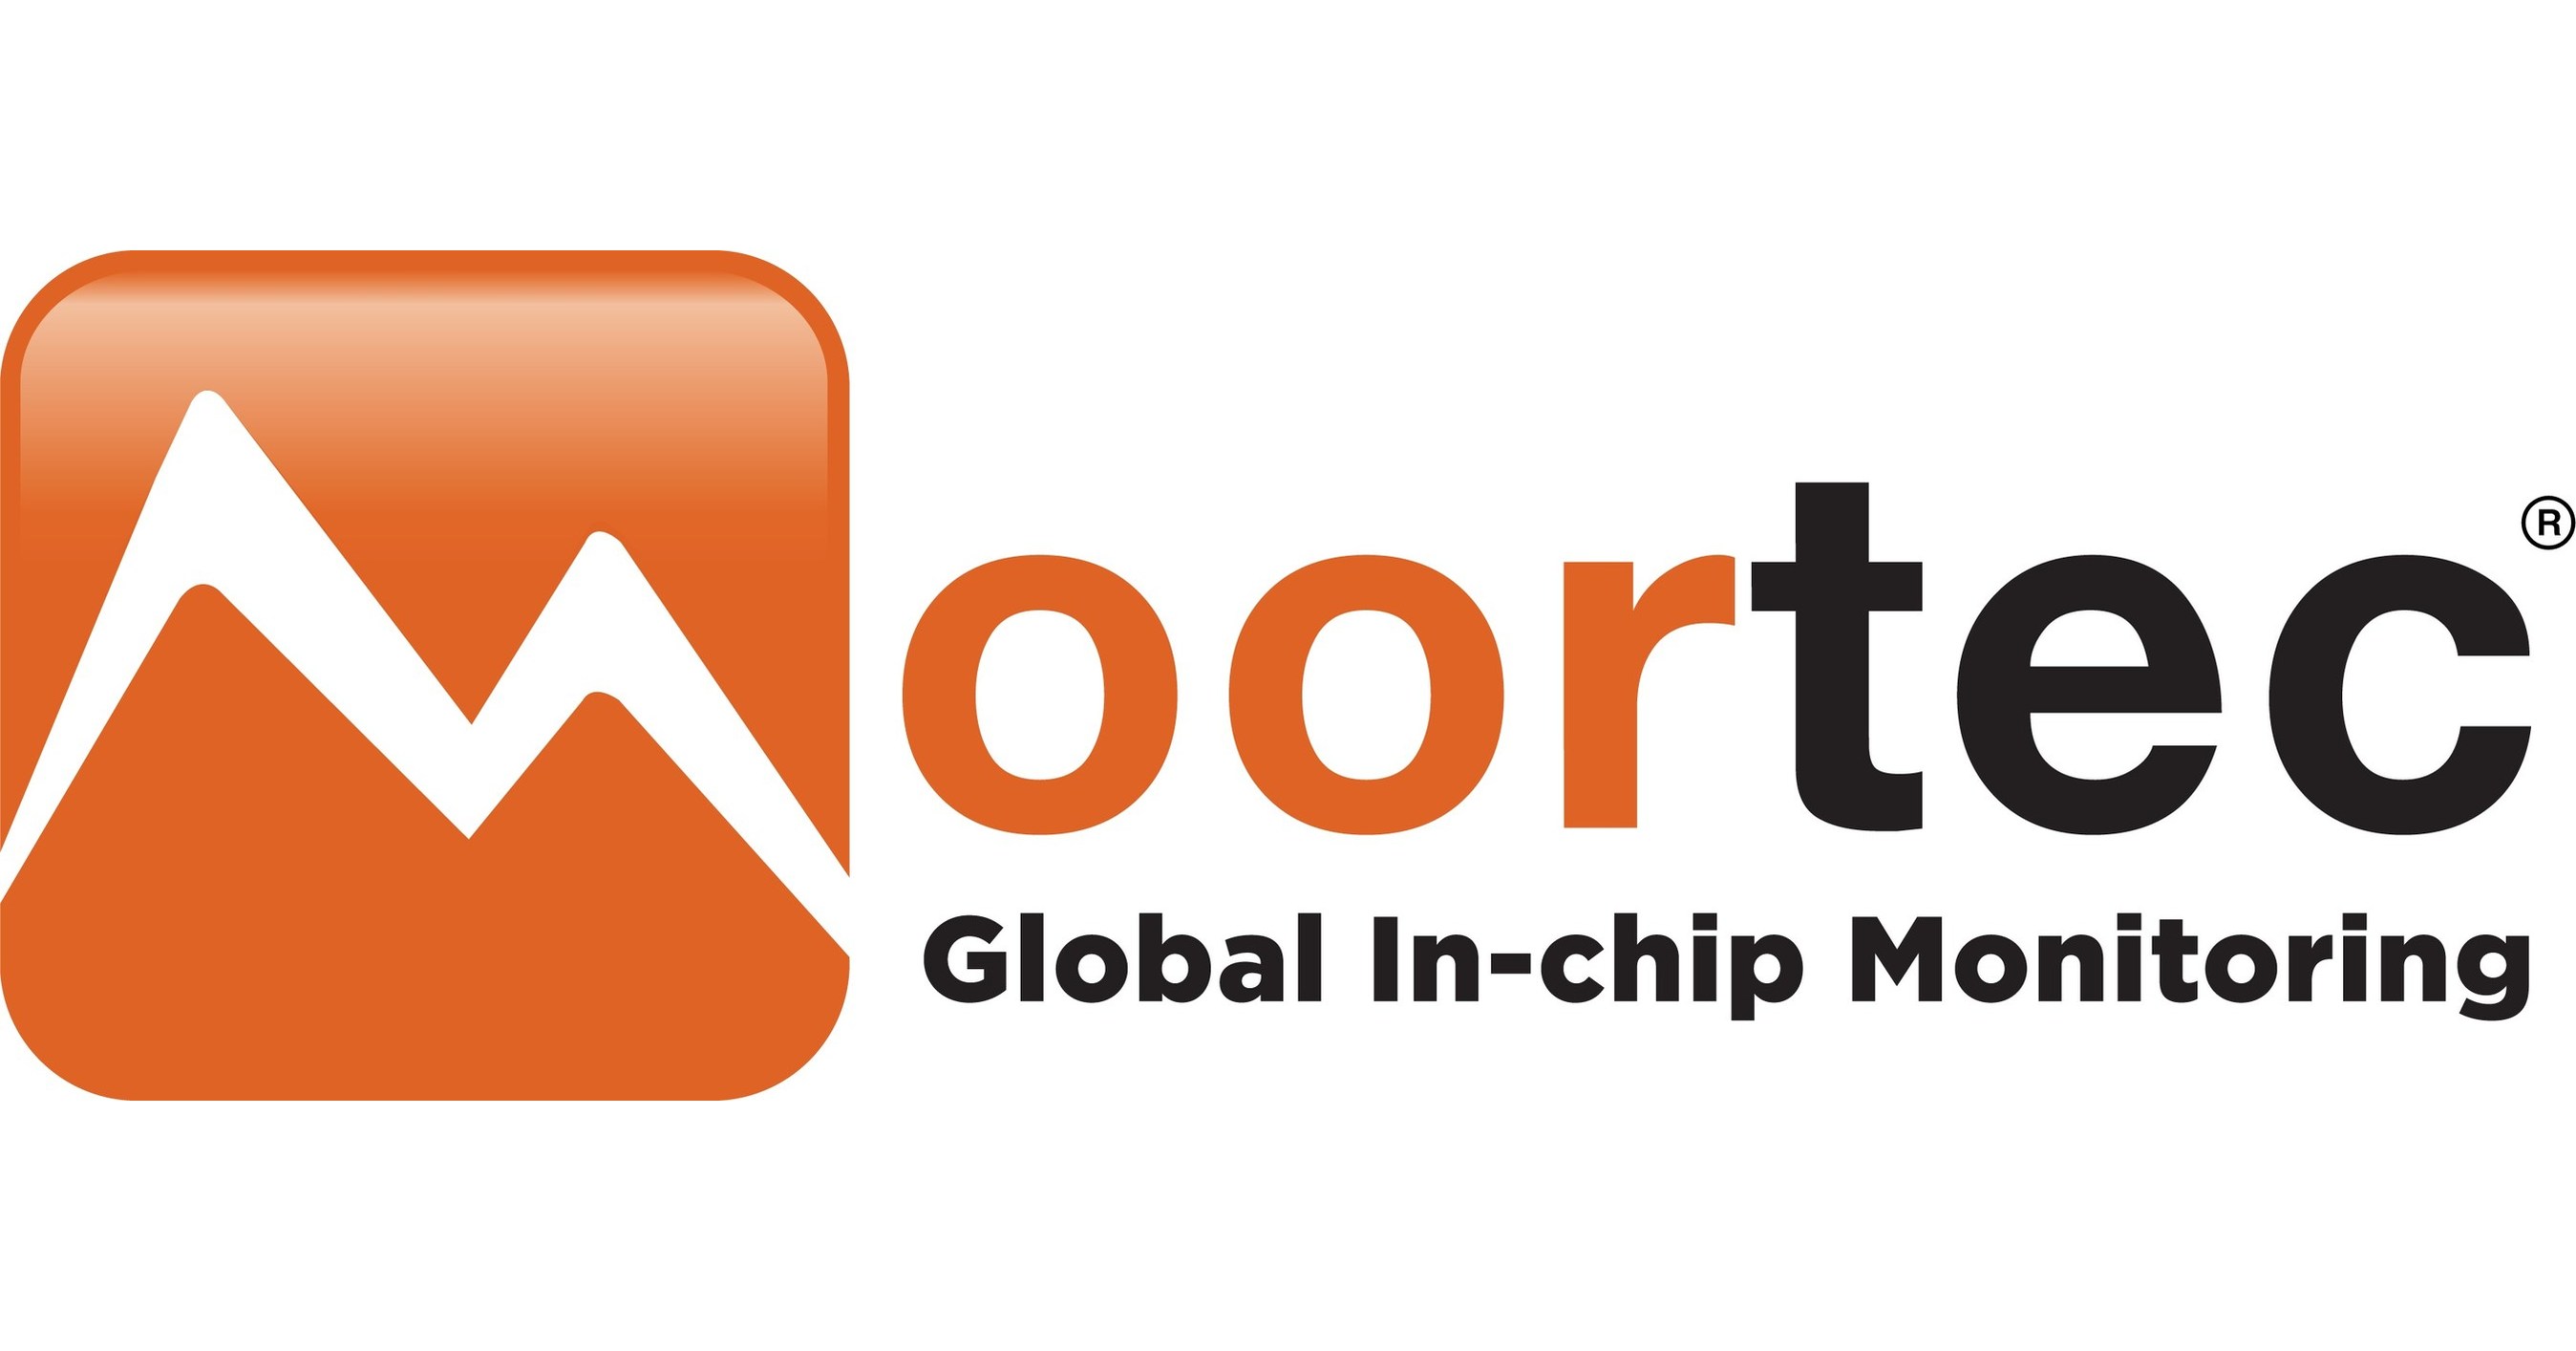 Moortec Provides In-Chip Sensing Fabrics on TSMC N6 Process Technology